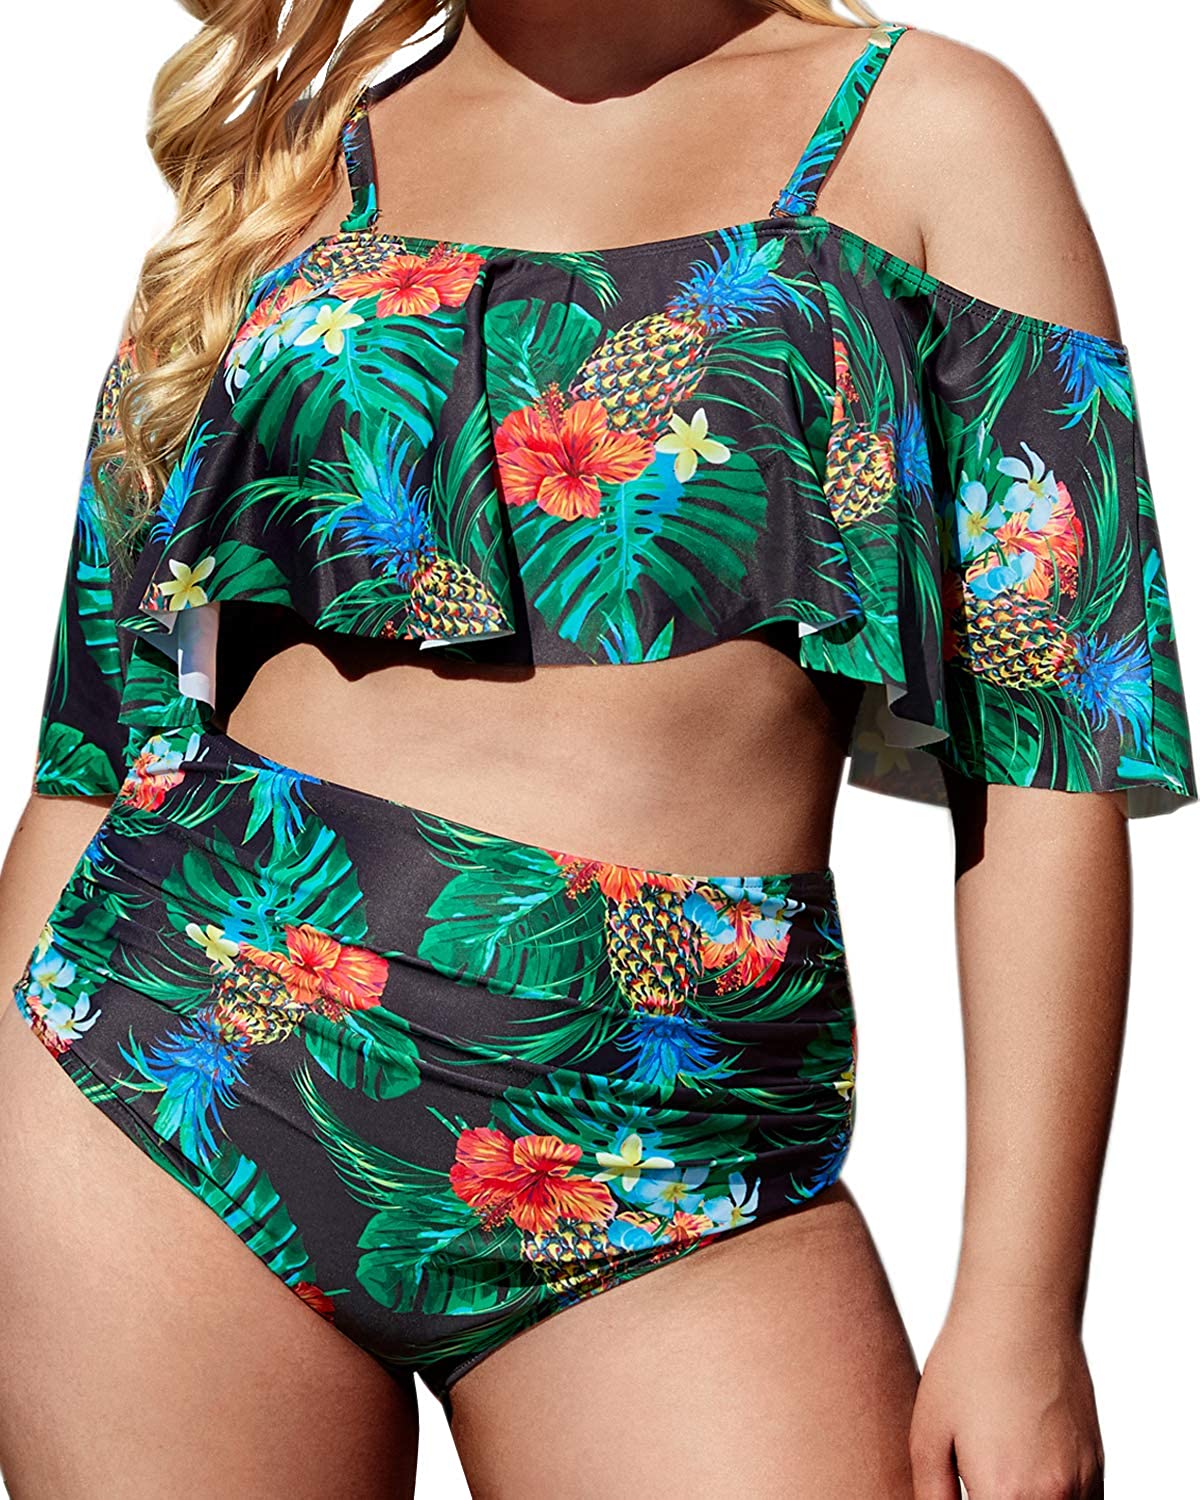 US Womens Two Piece Tankini Bikini Set Swimsuit Bathing Suit Swimwear Plus Size